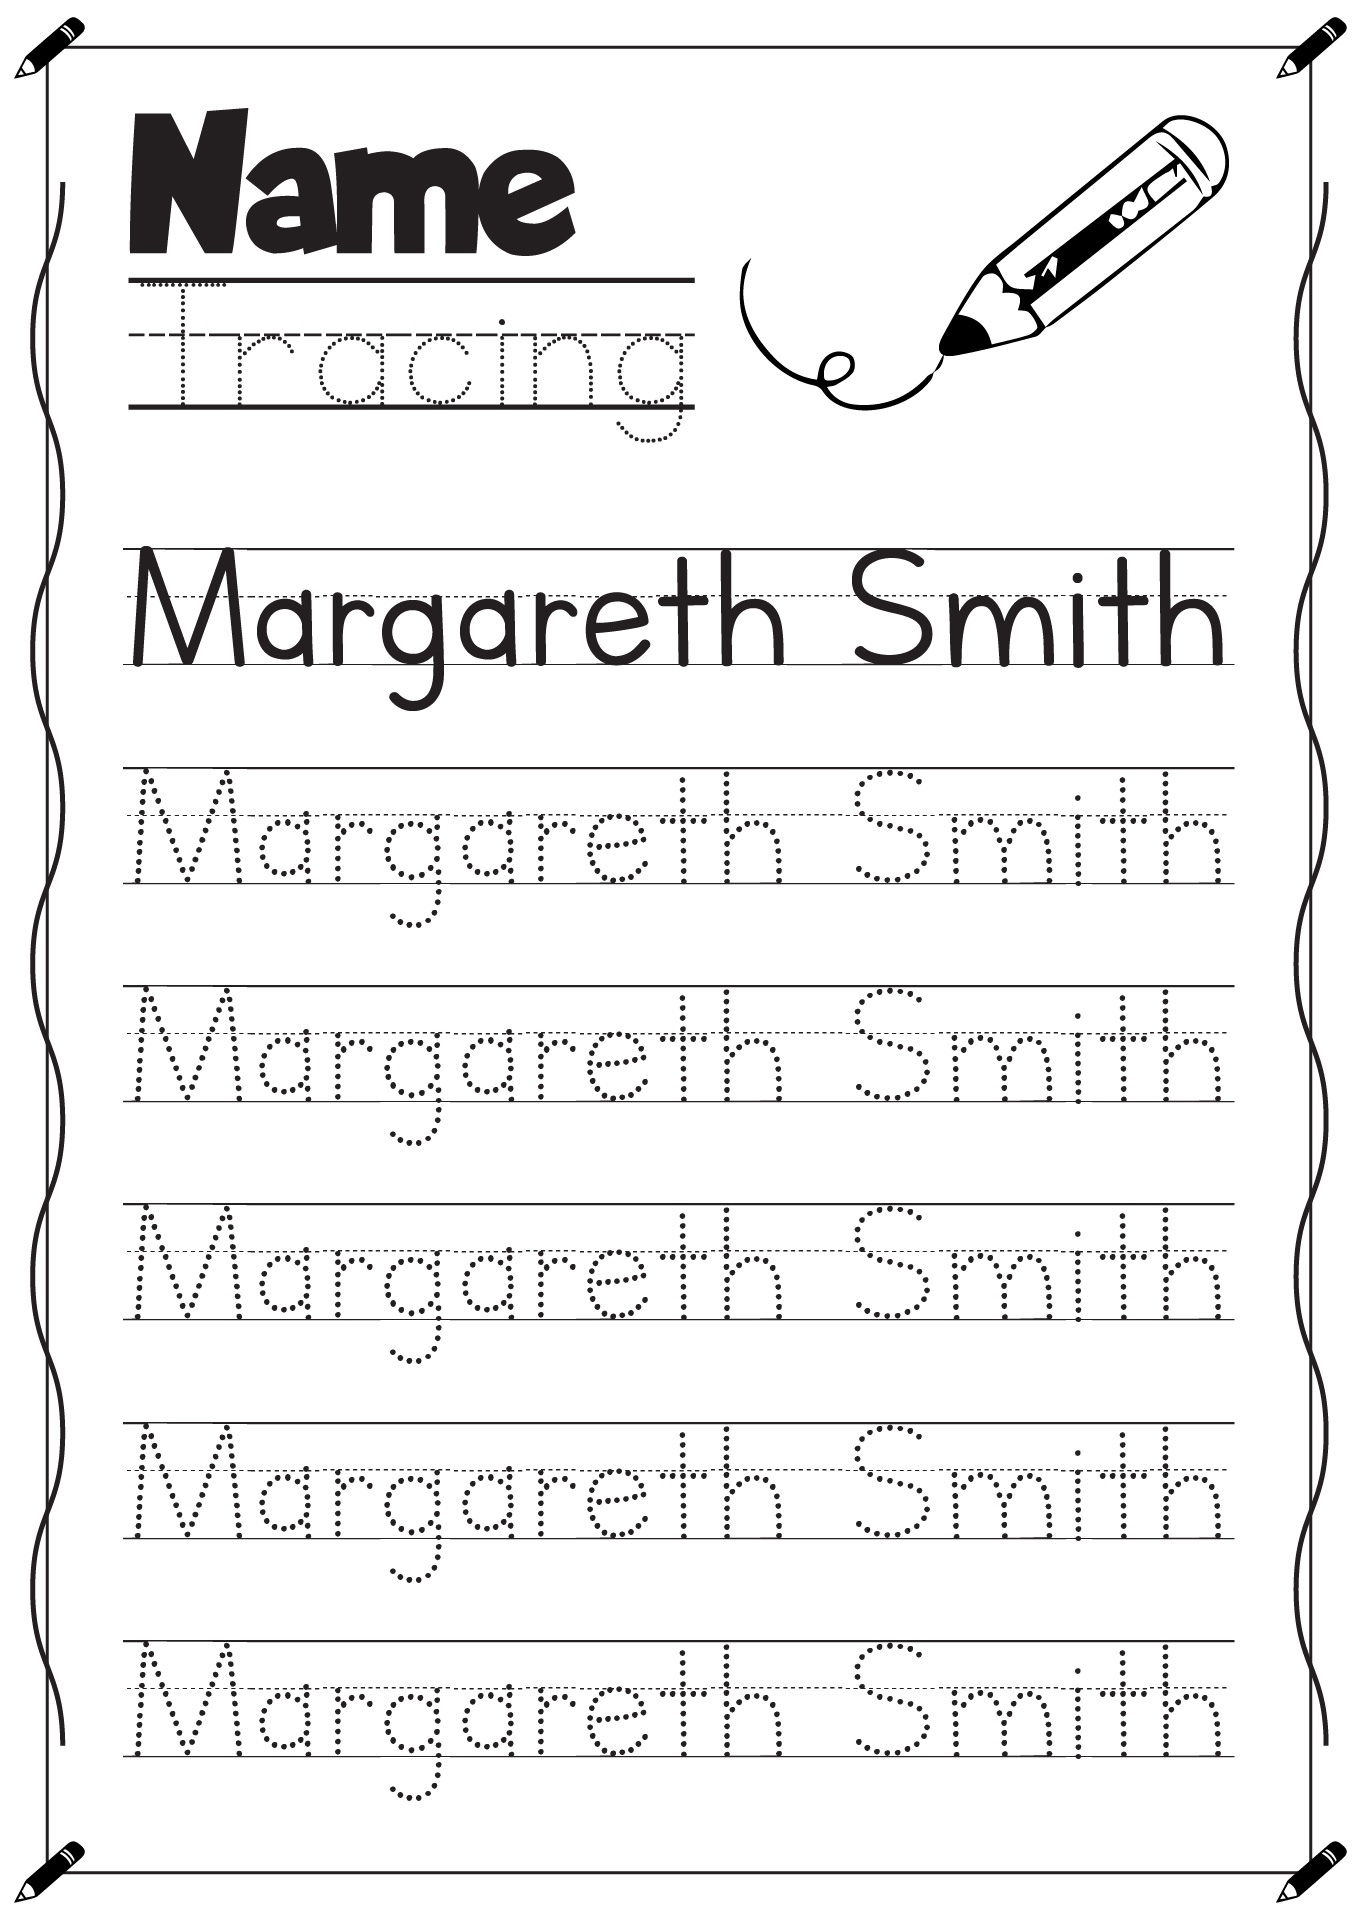 Preschool Name Tracing Worksheets